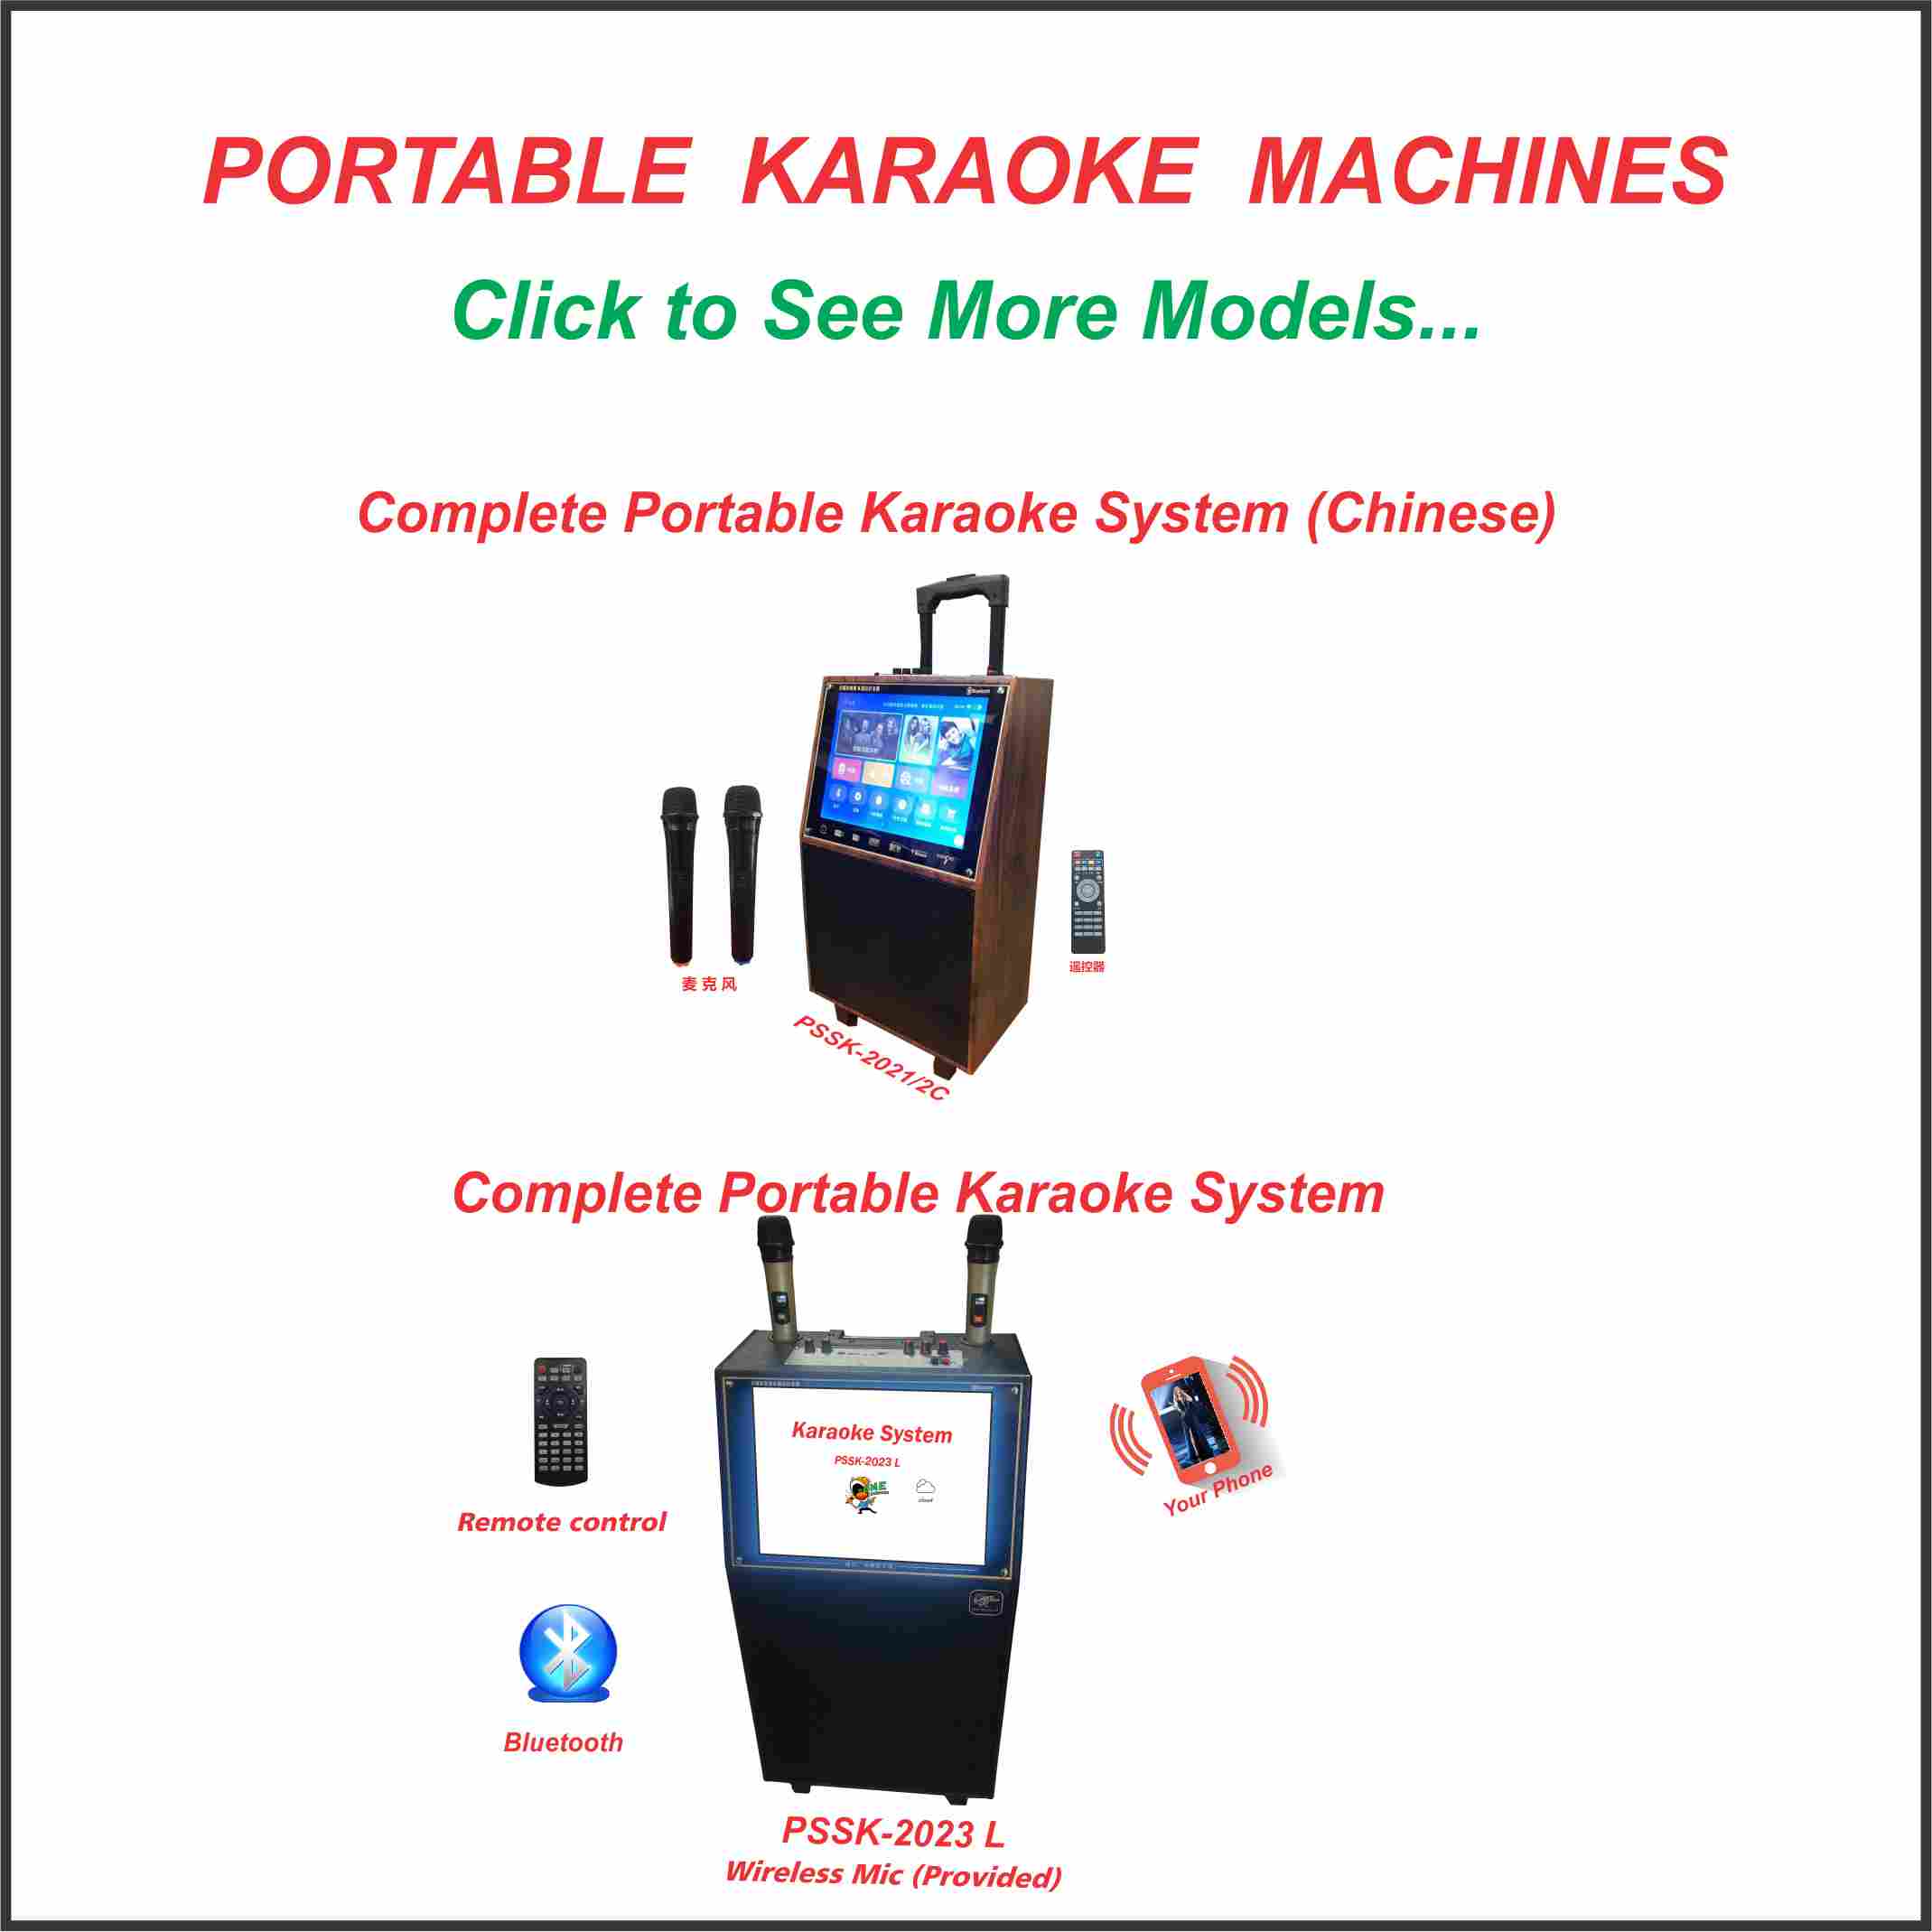 2. Portable Karaoke Machine